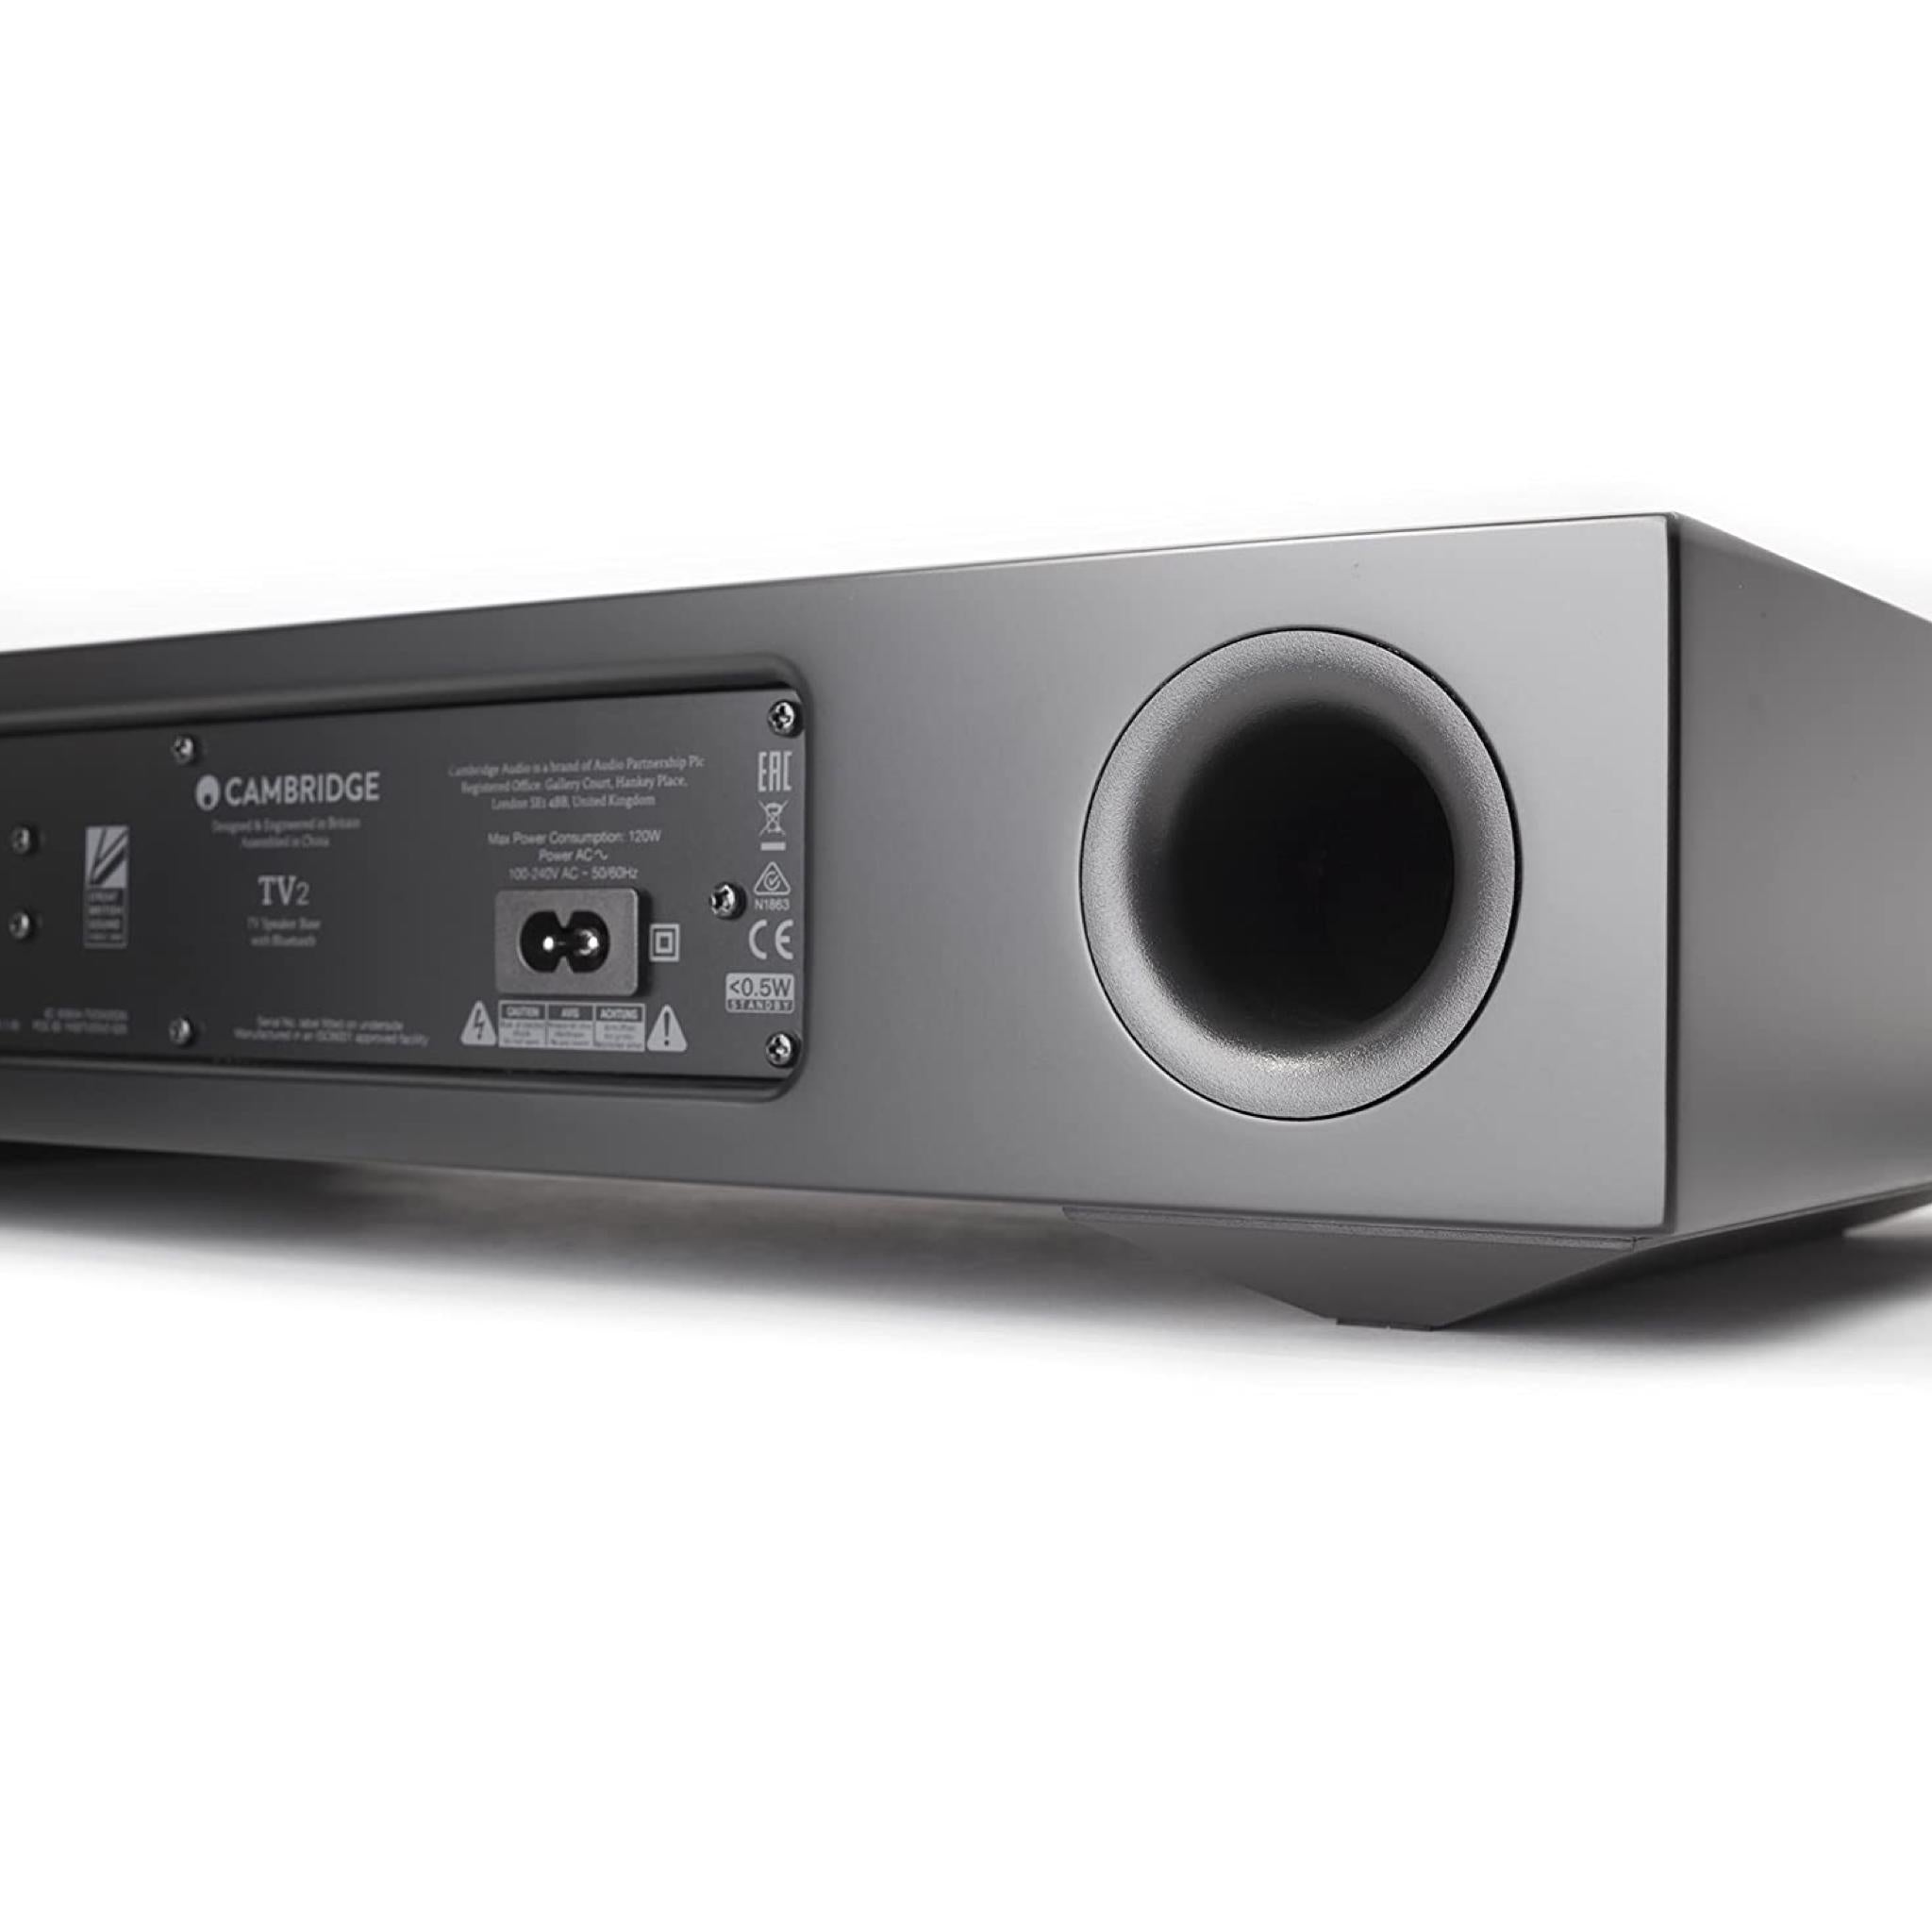 Cambridge Audio TV2 (v2) - Soundbase - AVStore